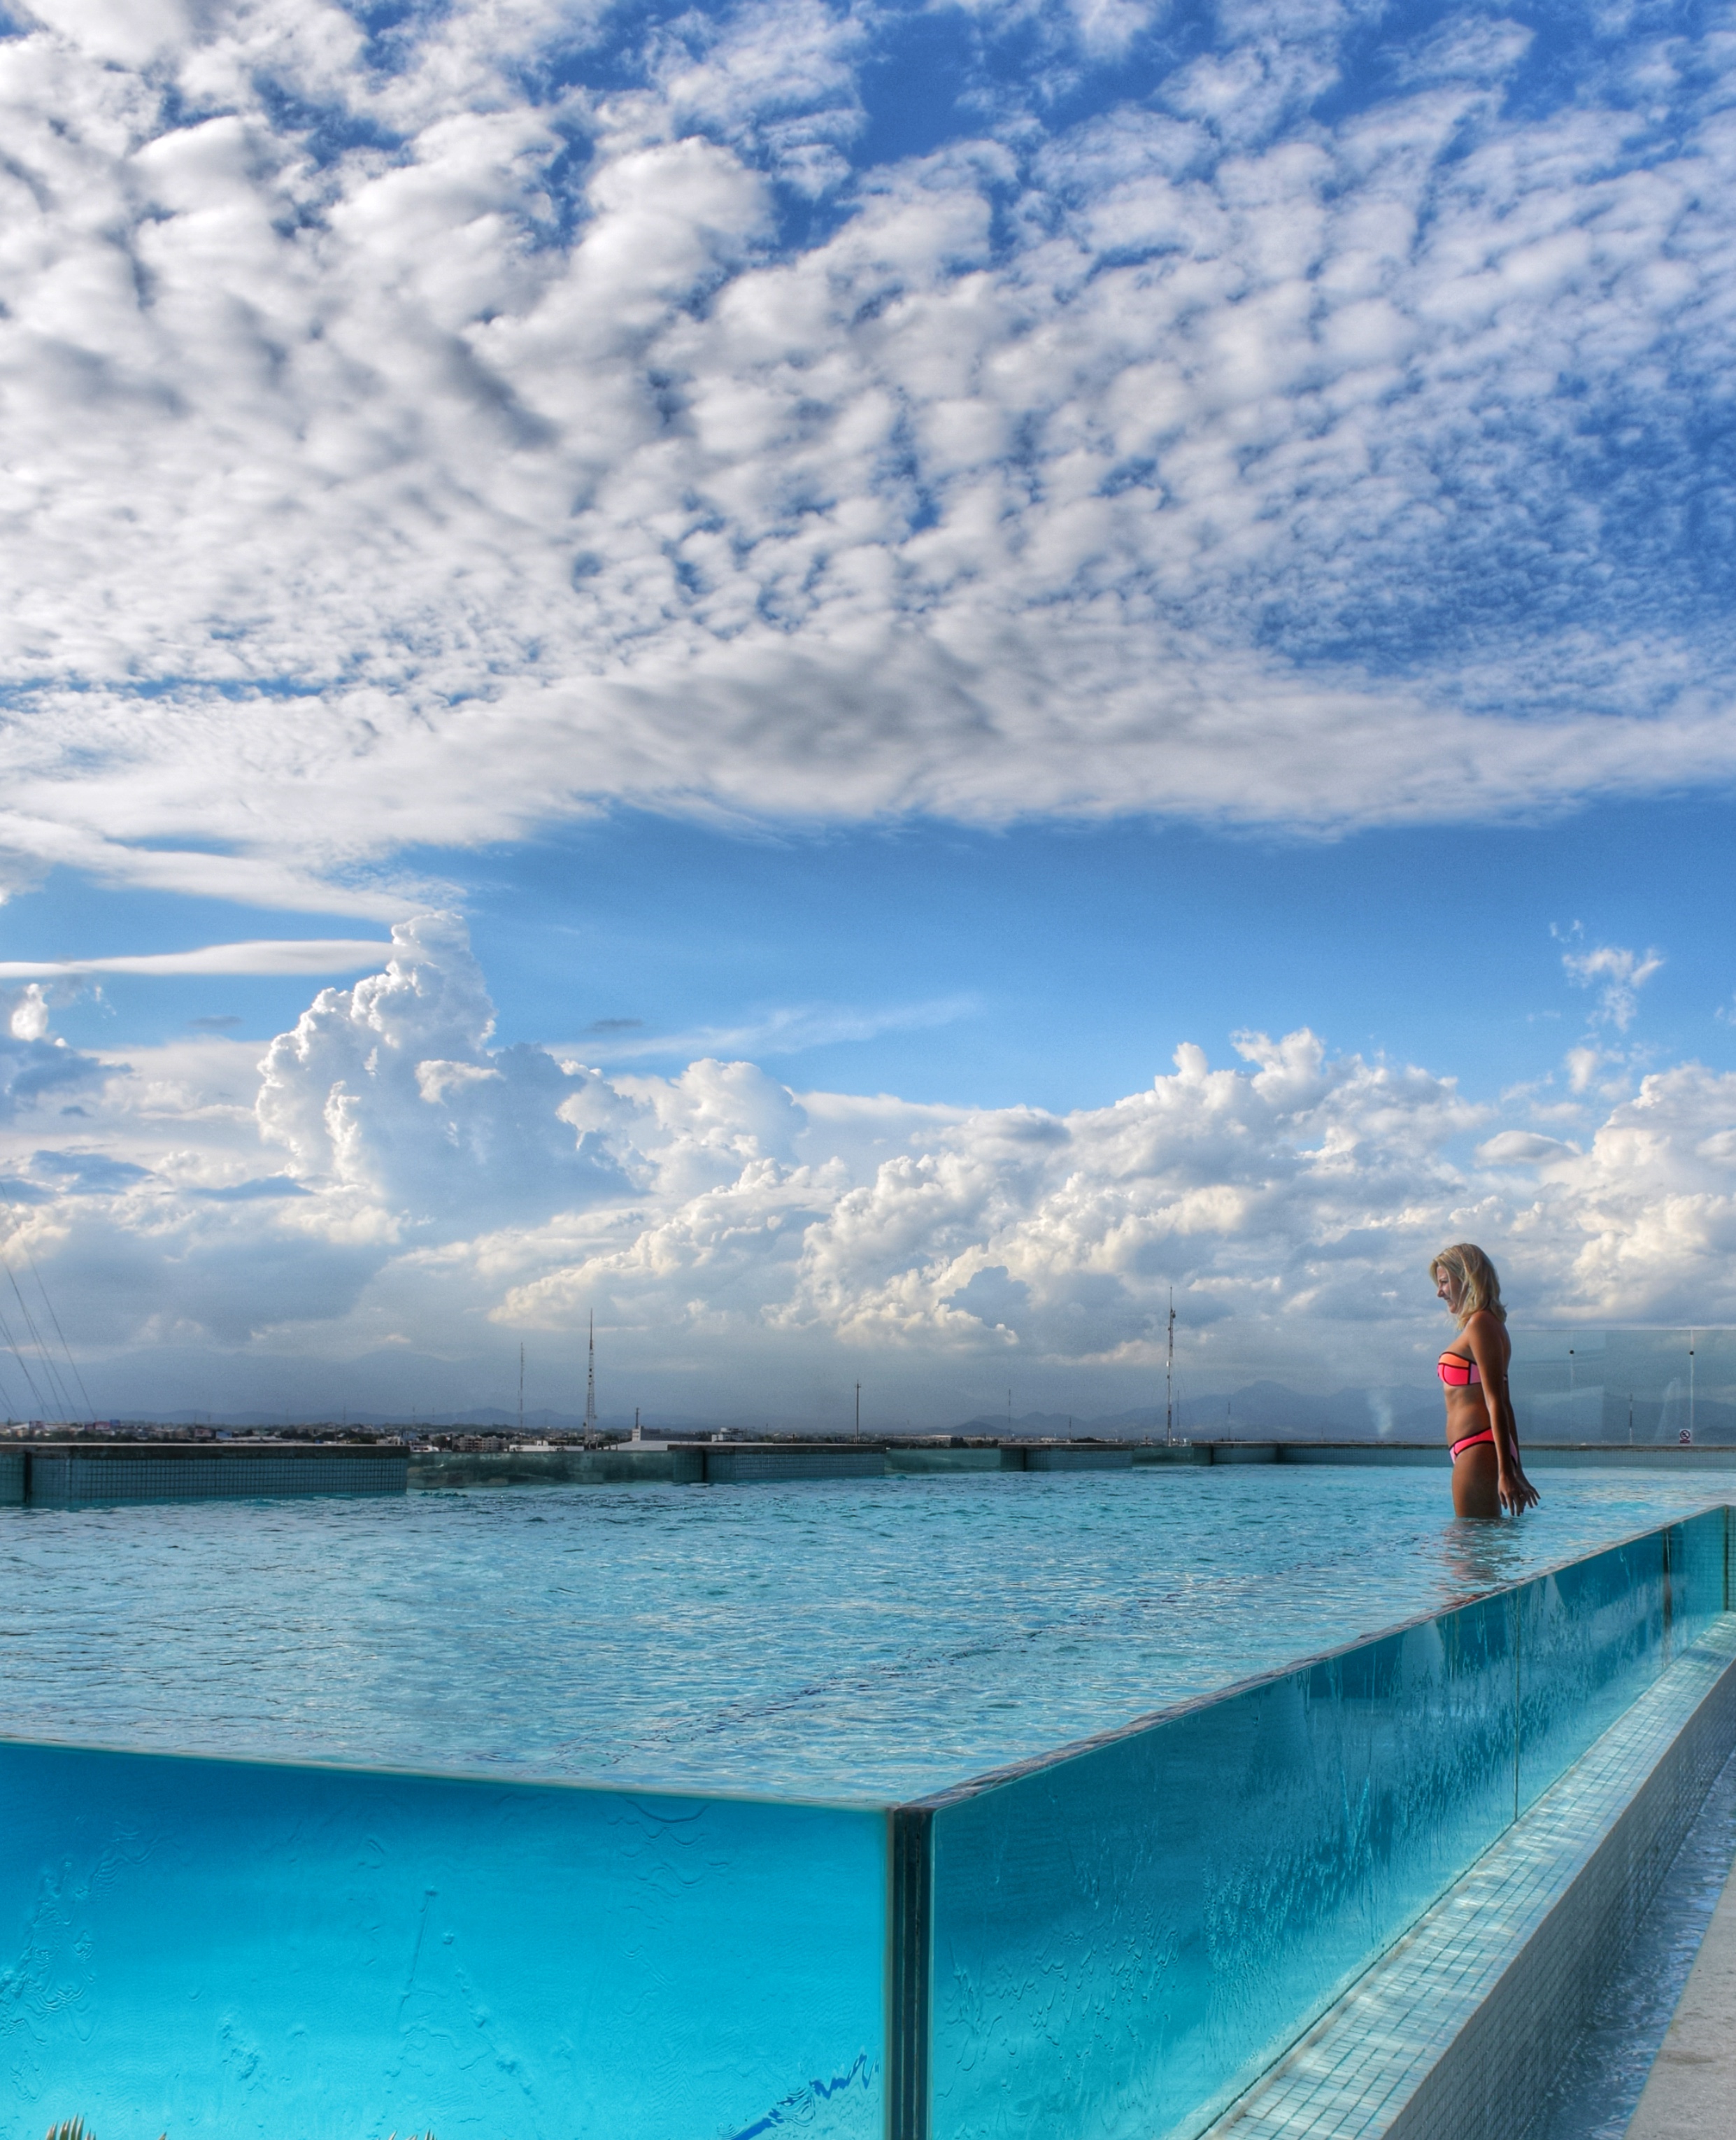 JW MARRIOTT SANTO DOMINGO piscina de vidro glass pool republica dominicana